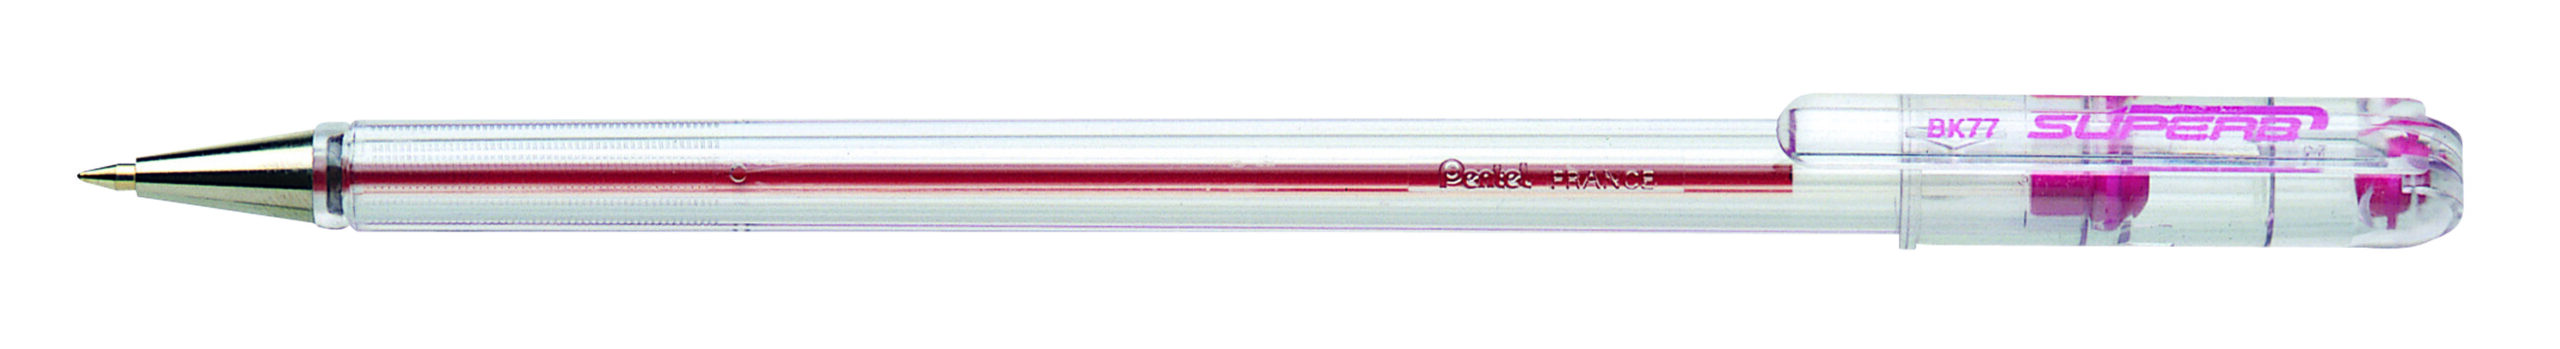 Penna Sfera Super B Bk77 Rosso 0 7mm Pentel Bk77b 3474370077035